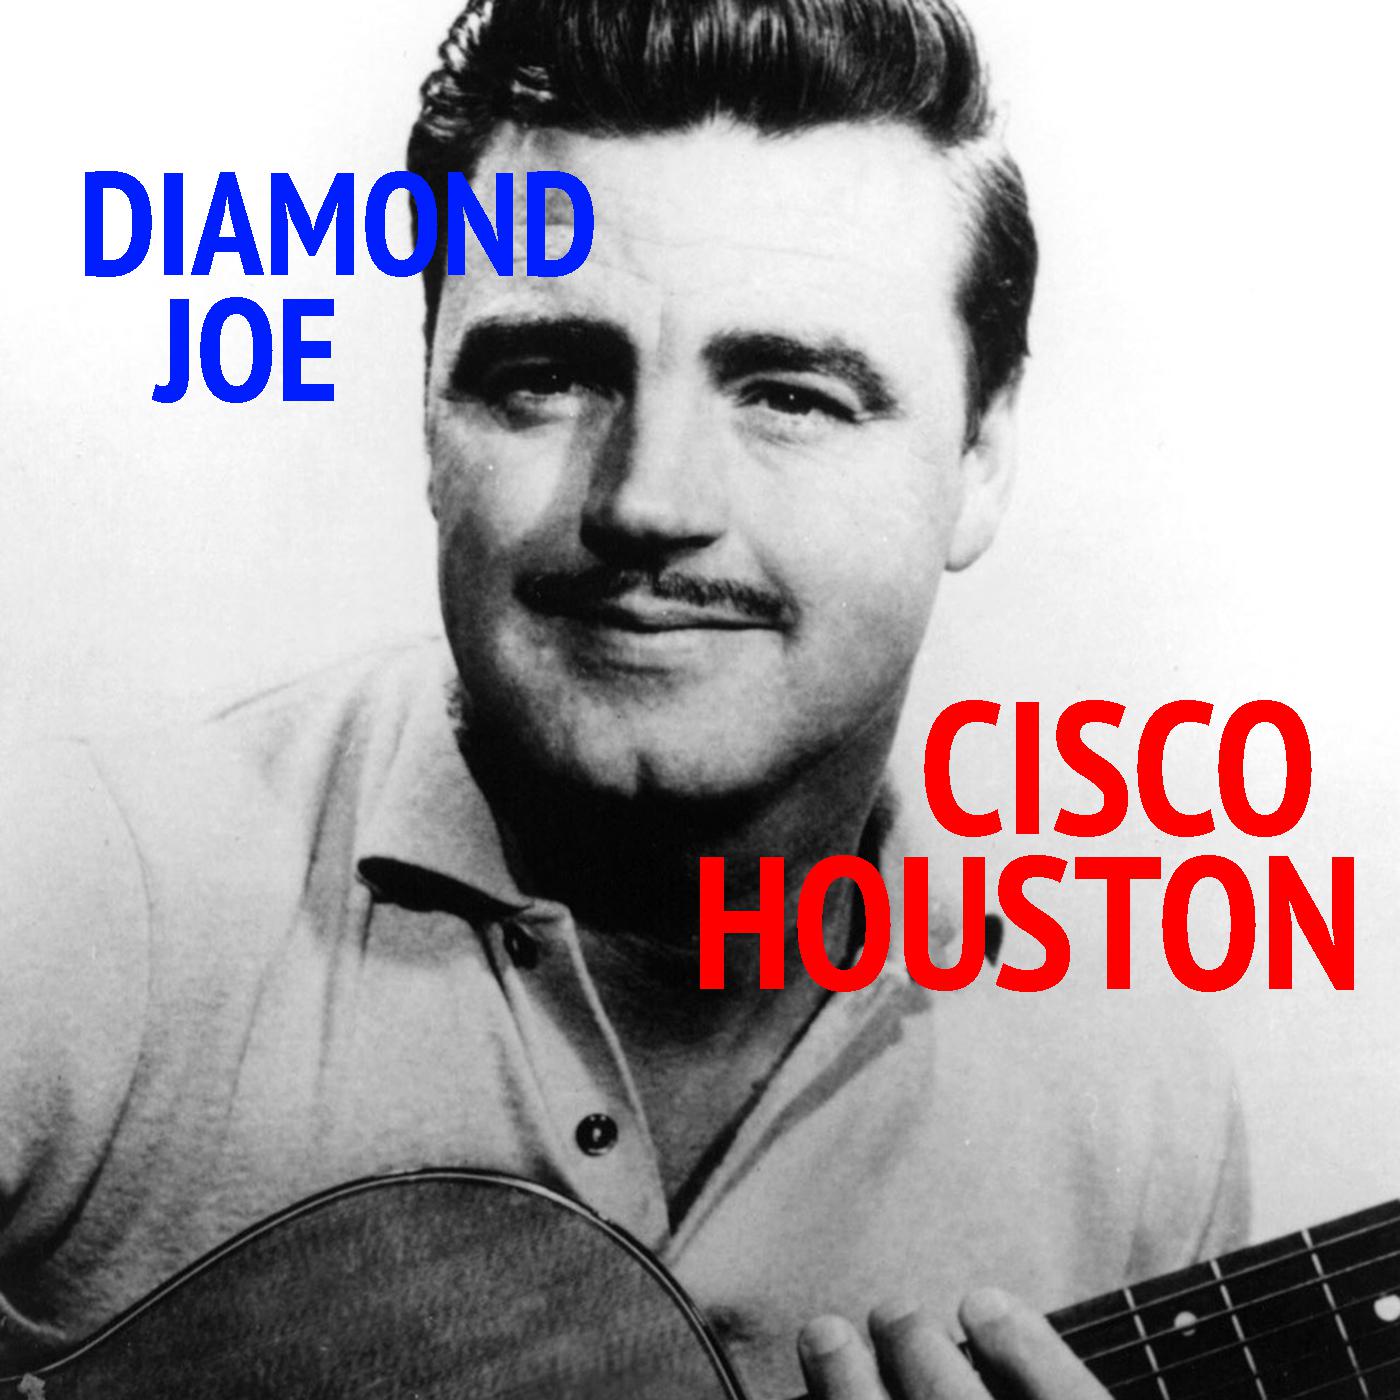 Diamond Joe